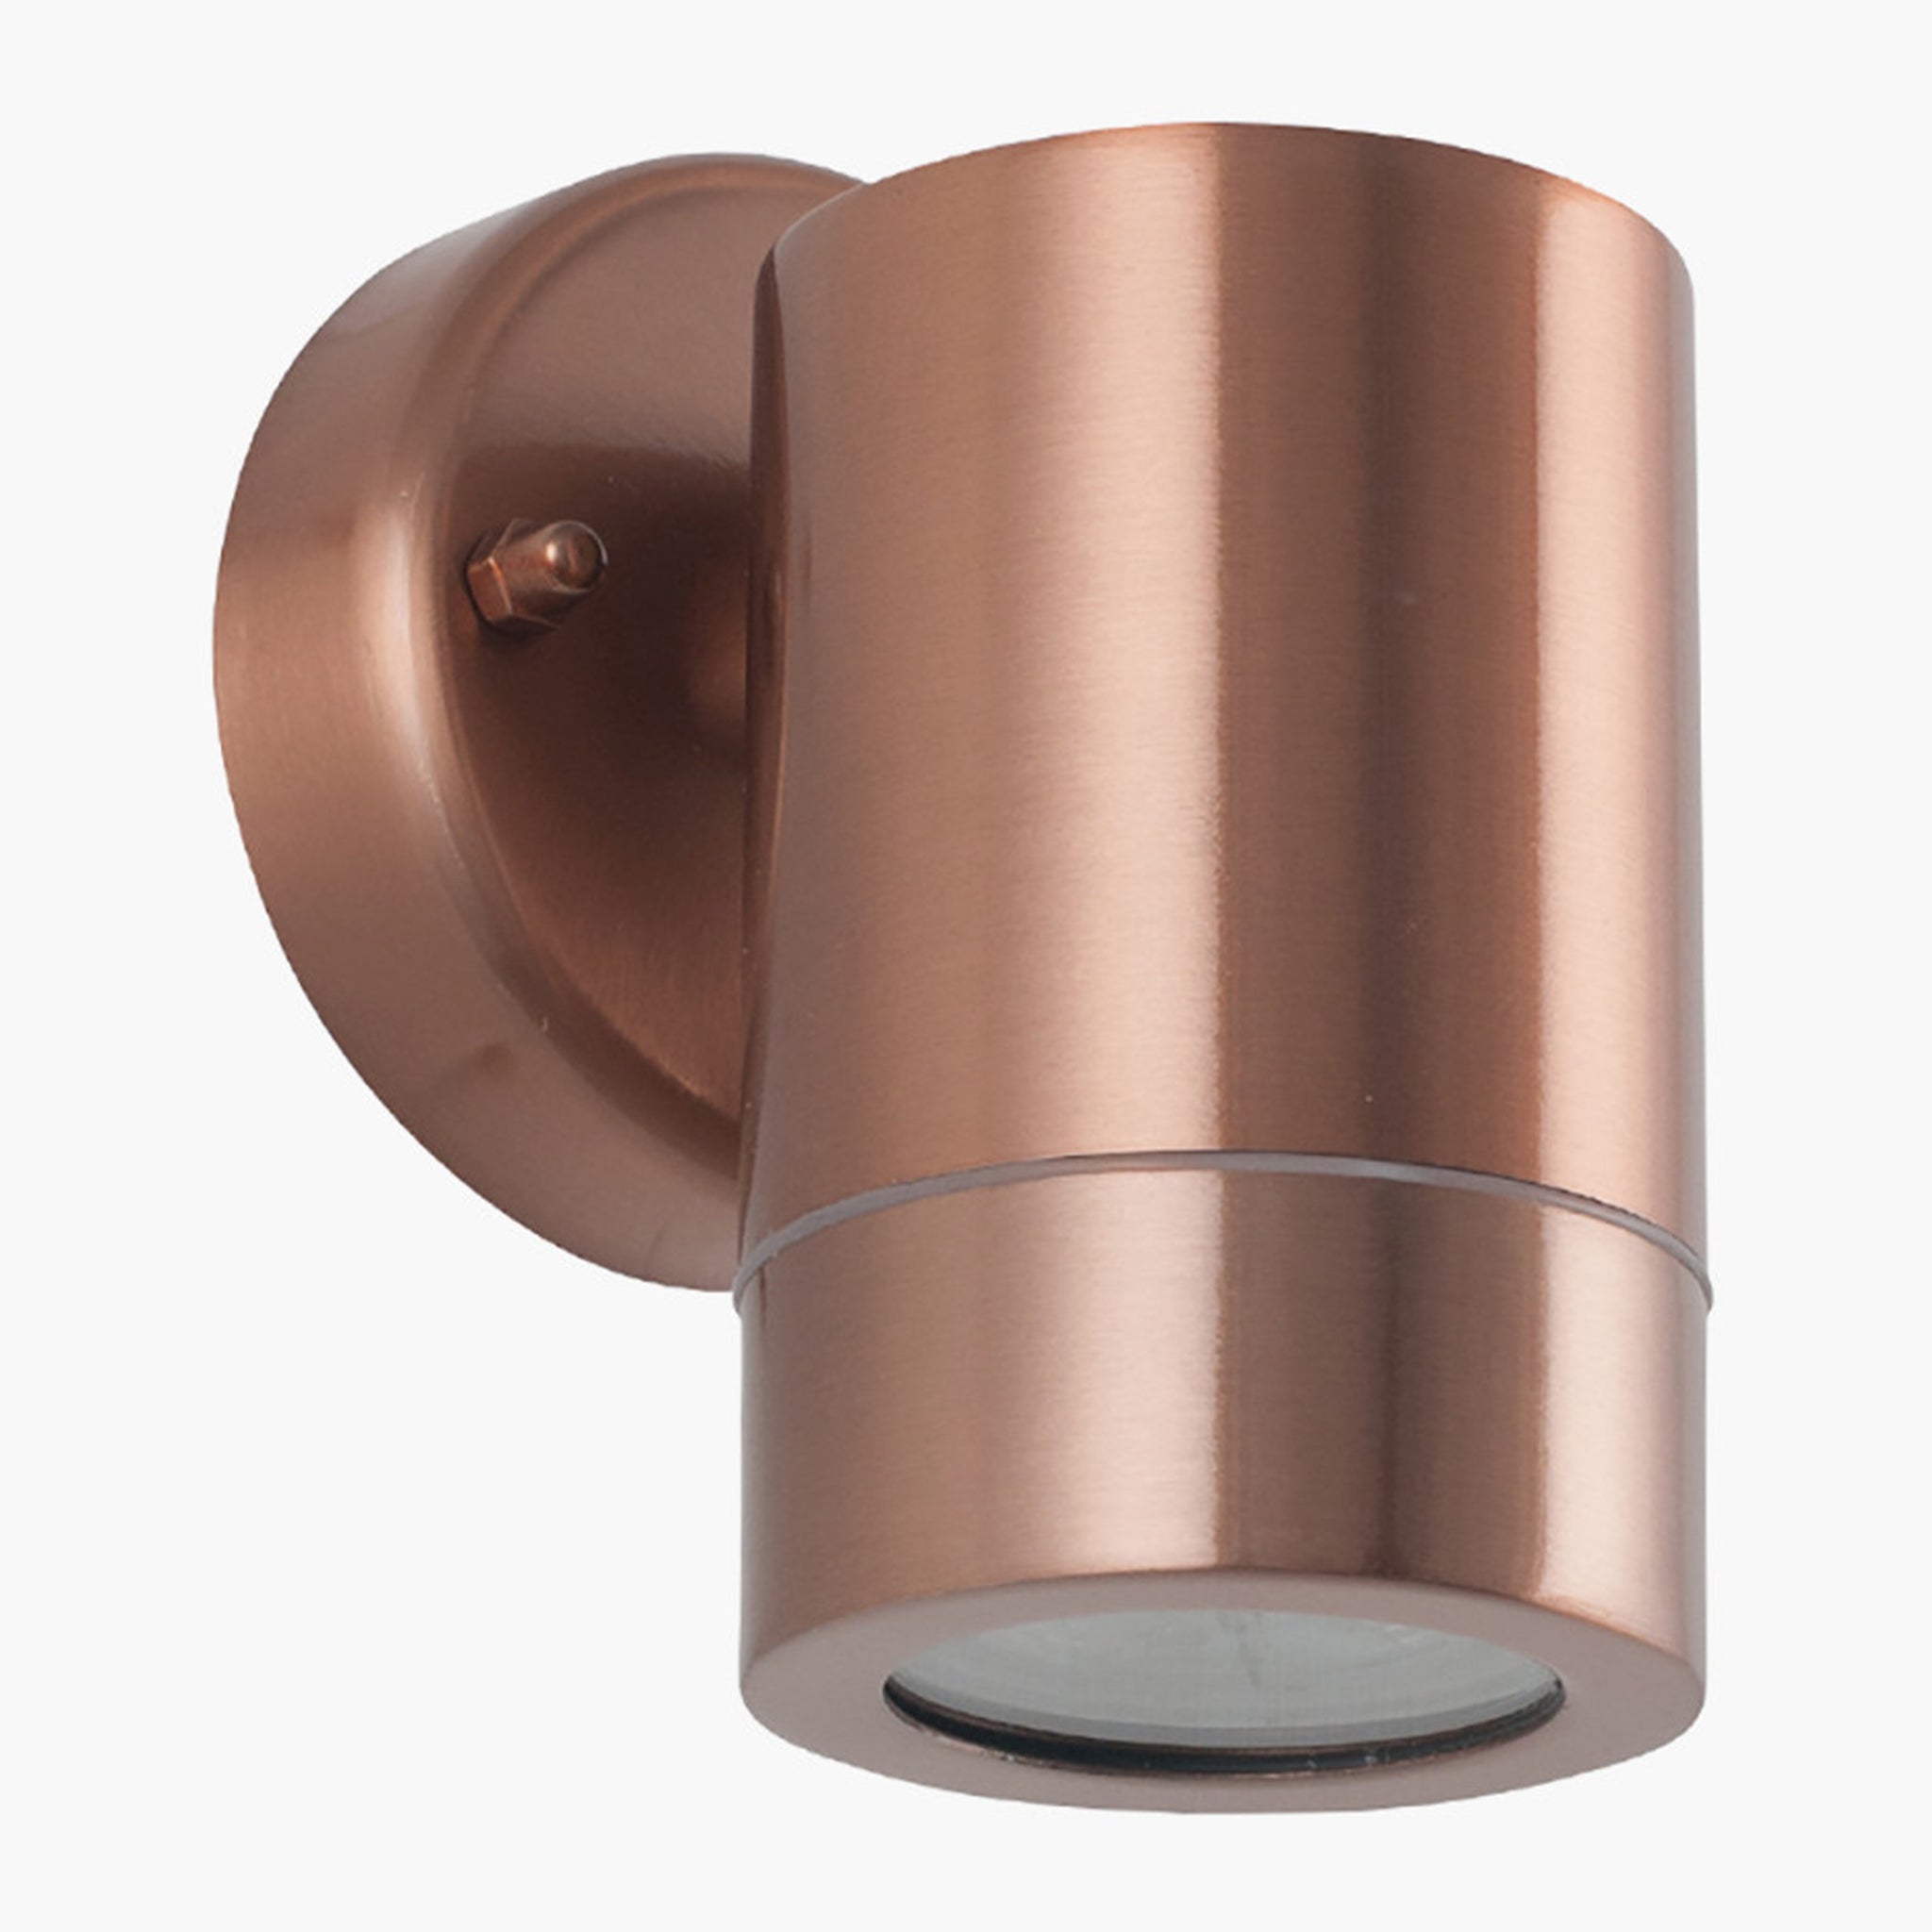 Lantana Metal Fixed Spot Wall Light in Copper